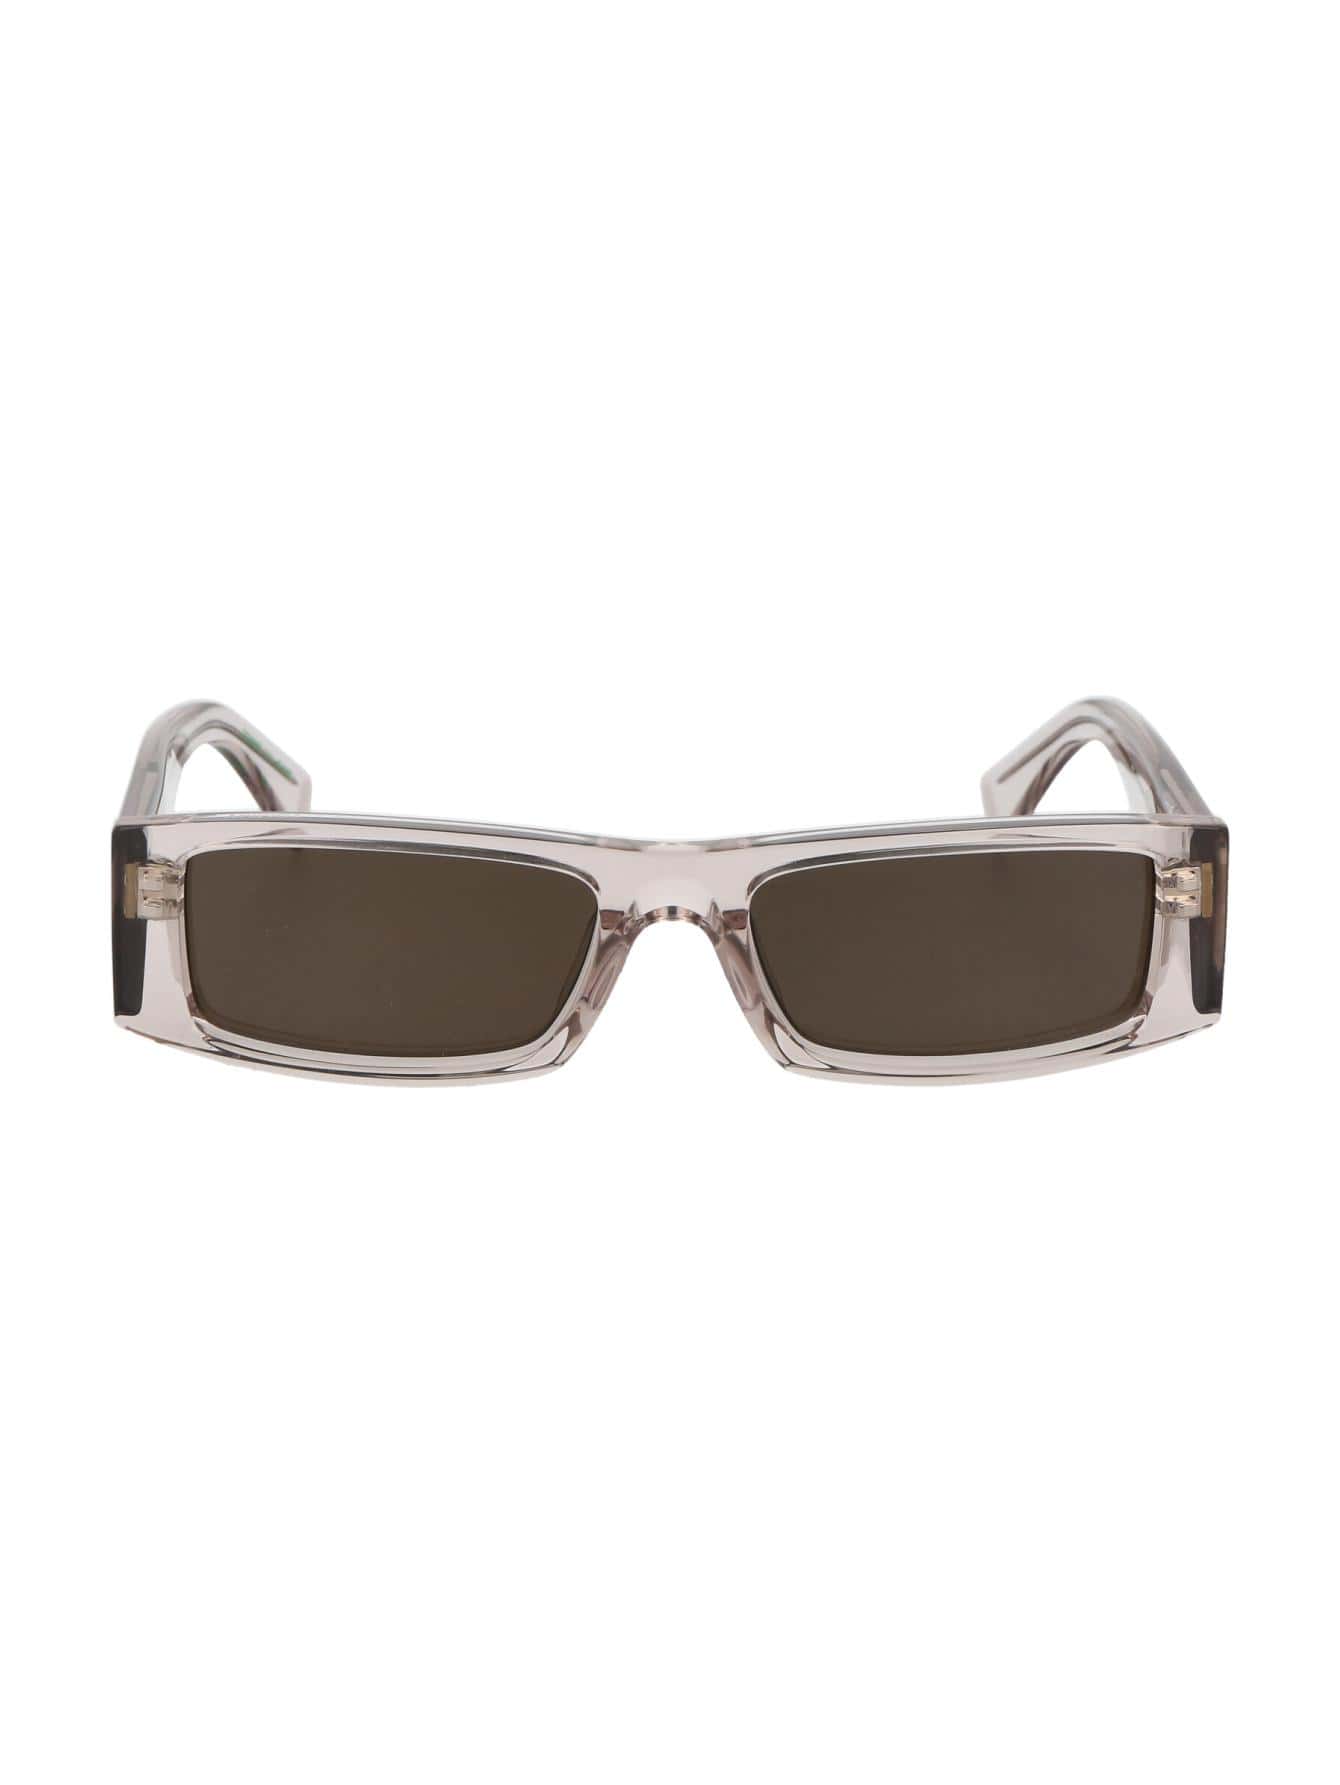 Мужские солнцезащитные очки Tommy Hilfiger DECOR TJ0092S10A70, многоцветный солнцезащитные очки tommy hilfiger